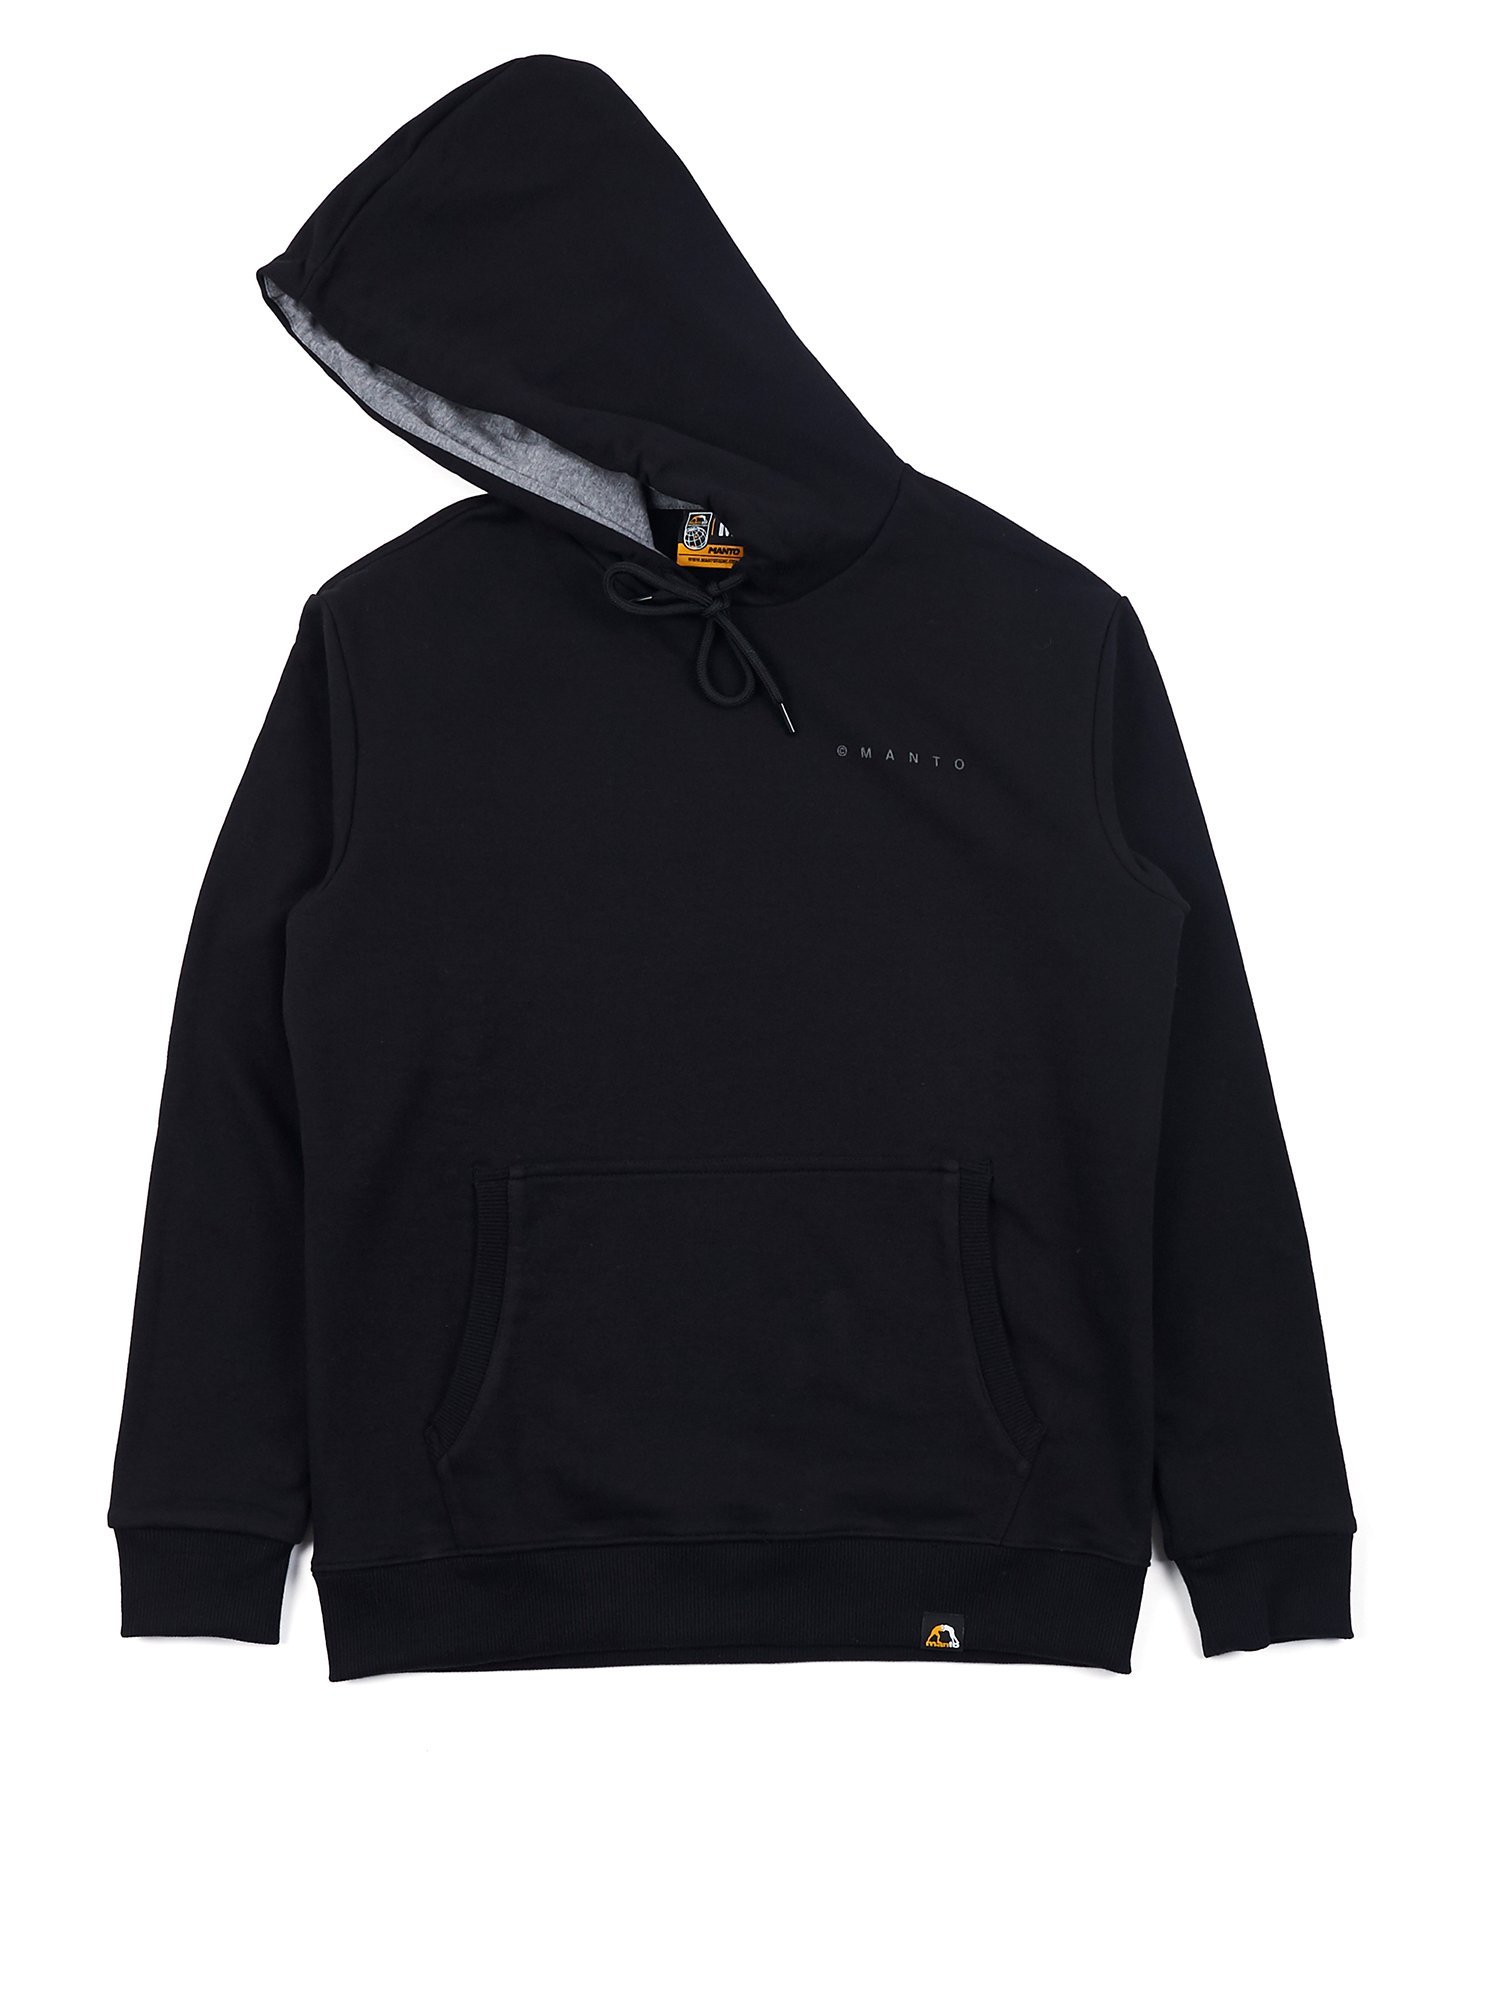 MANTO hoodie SKULL 20 black | CLOTHING \ SWEATSHIRTS | Top Quality ...